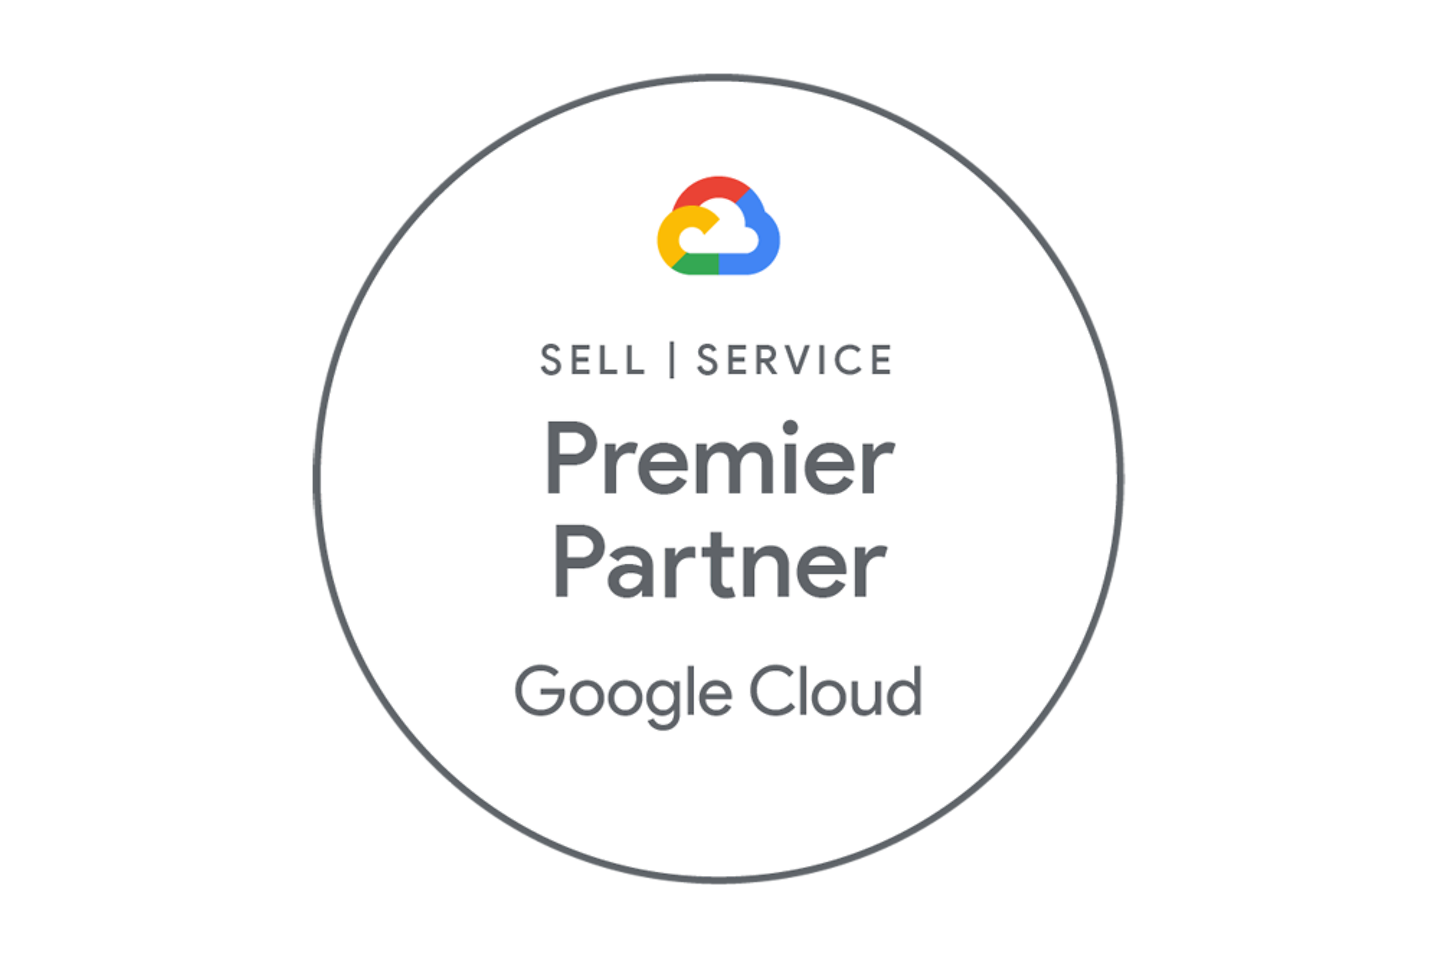 Google Cloud Premier Partner Sell und Service Engagement Modell